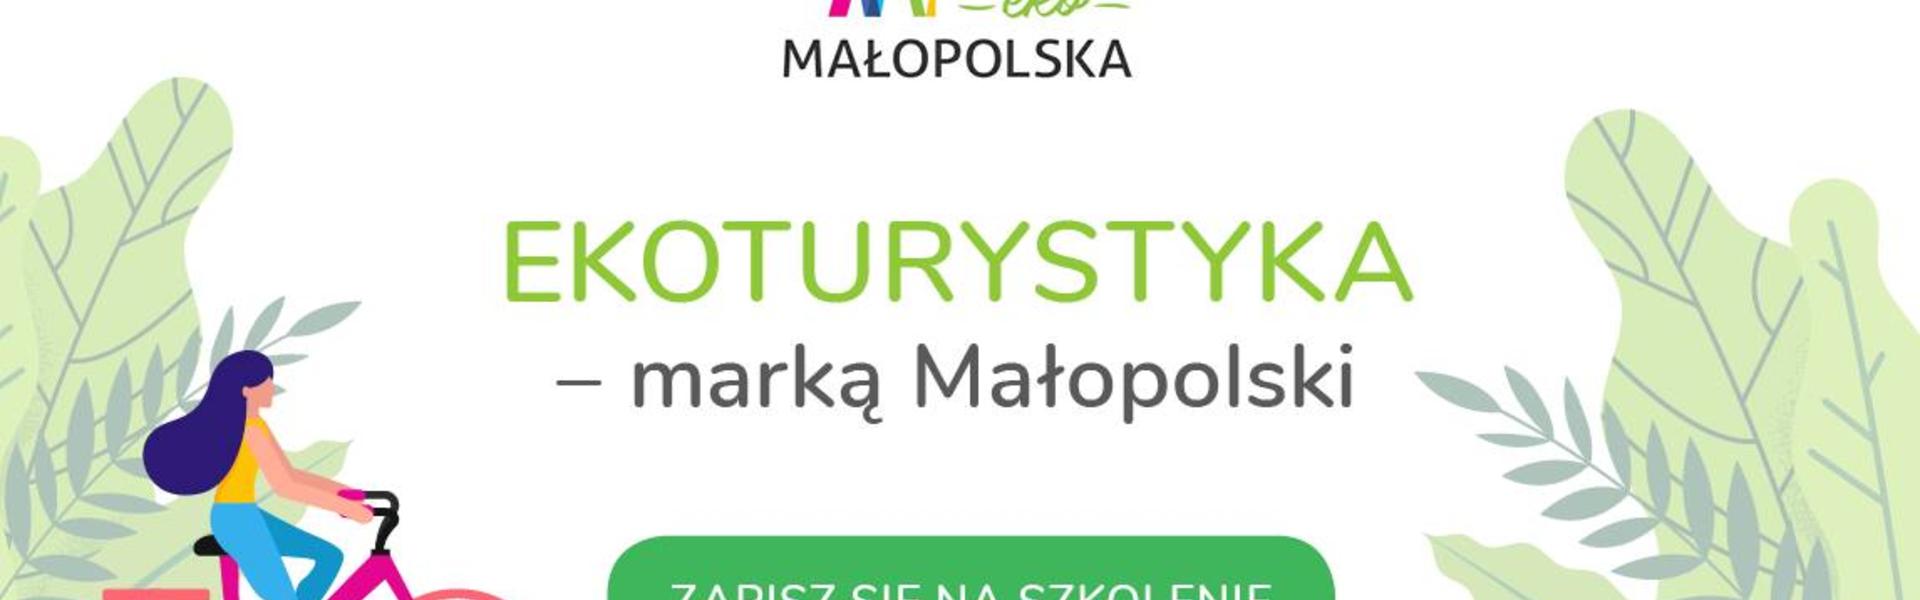 Ekoturystyka marką Małopolski